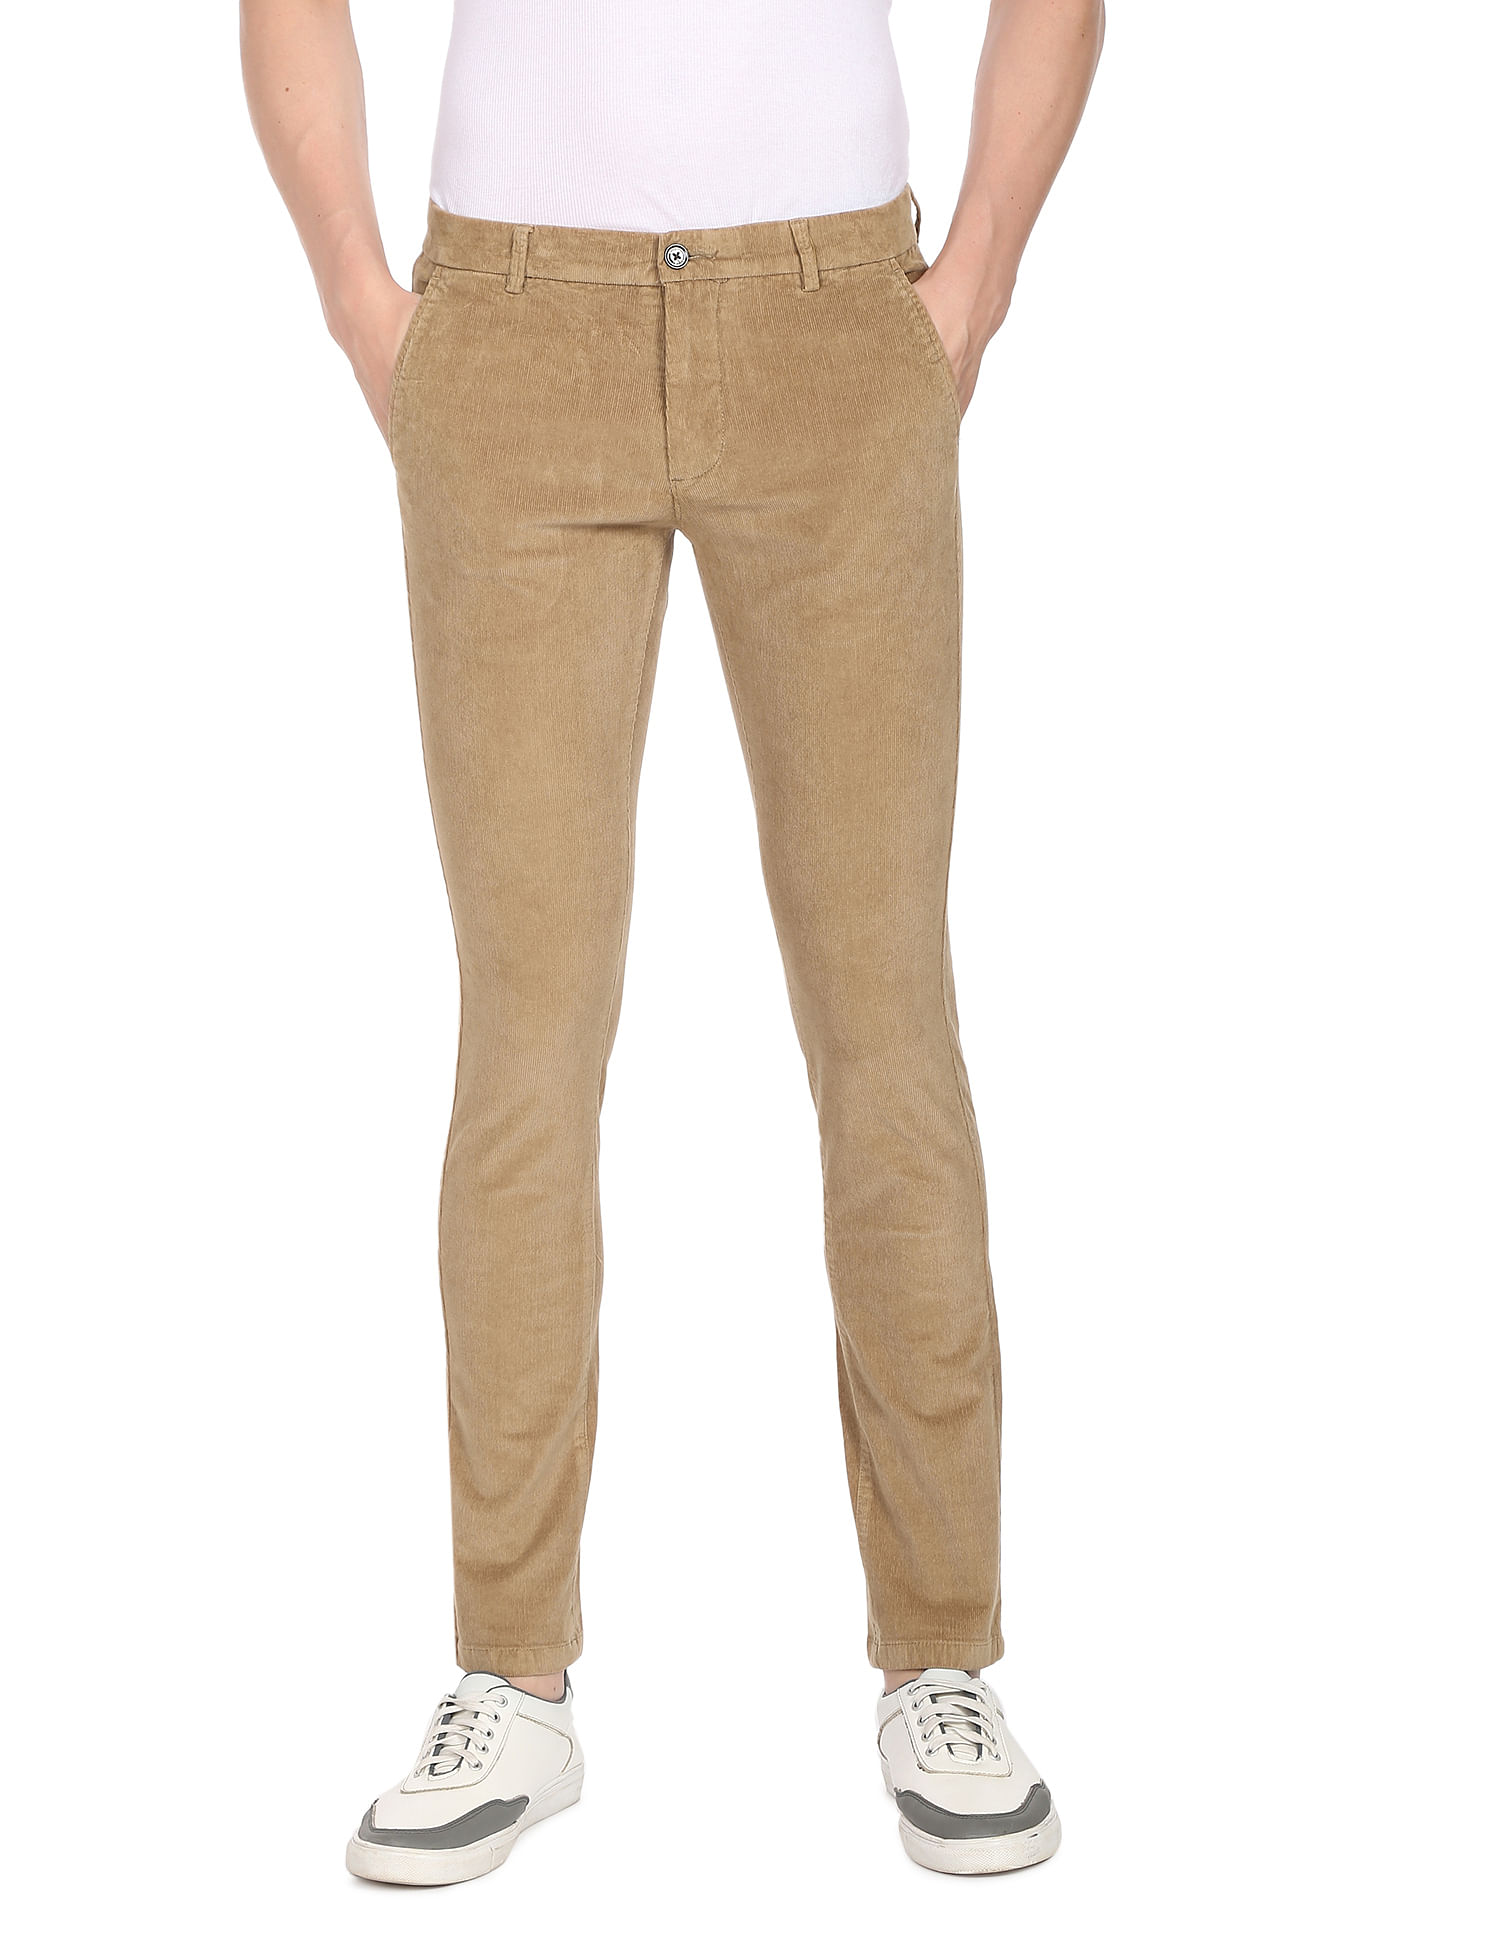 Buy Brown Trousers  Pants for Men by Ketch Online  Ajiocom